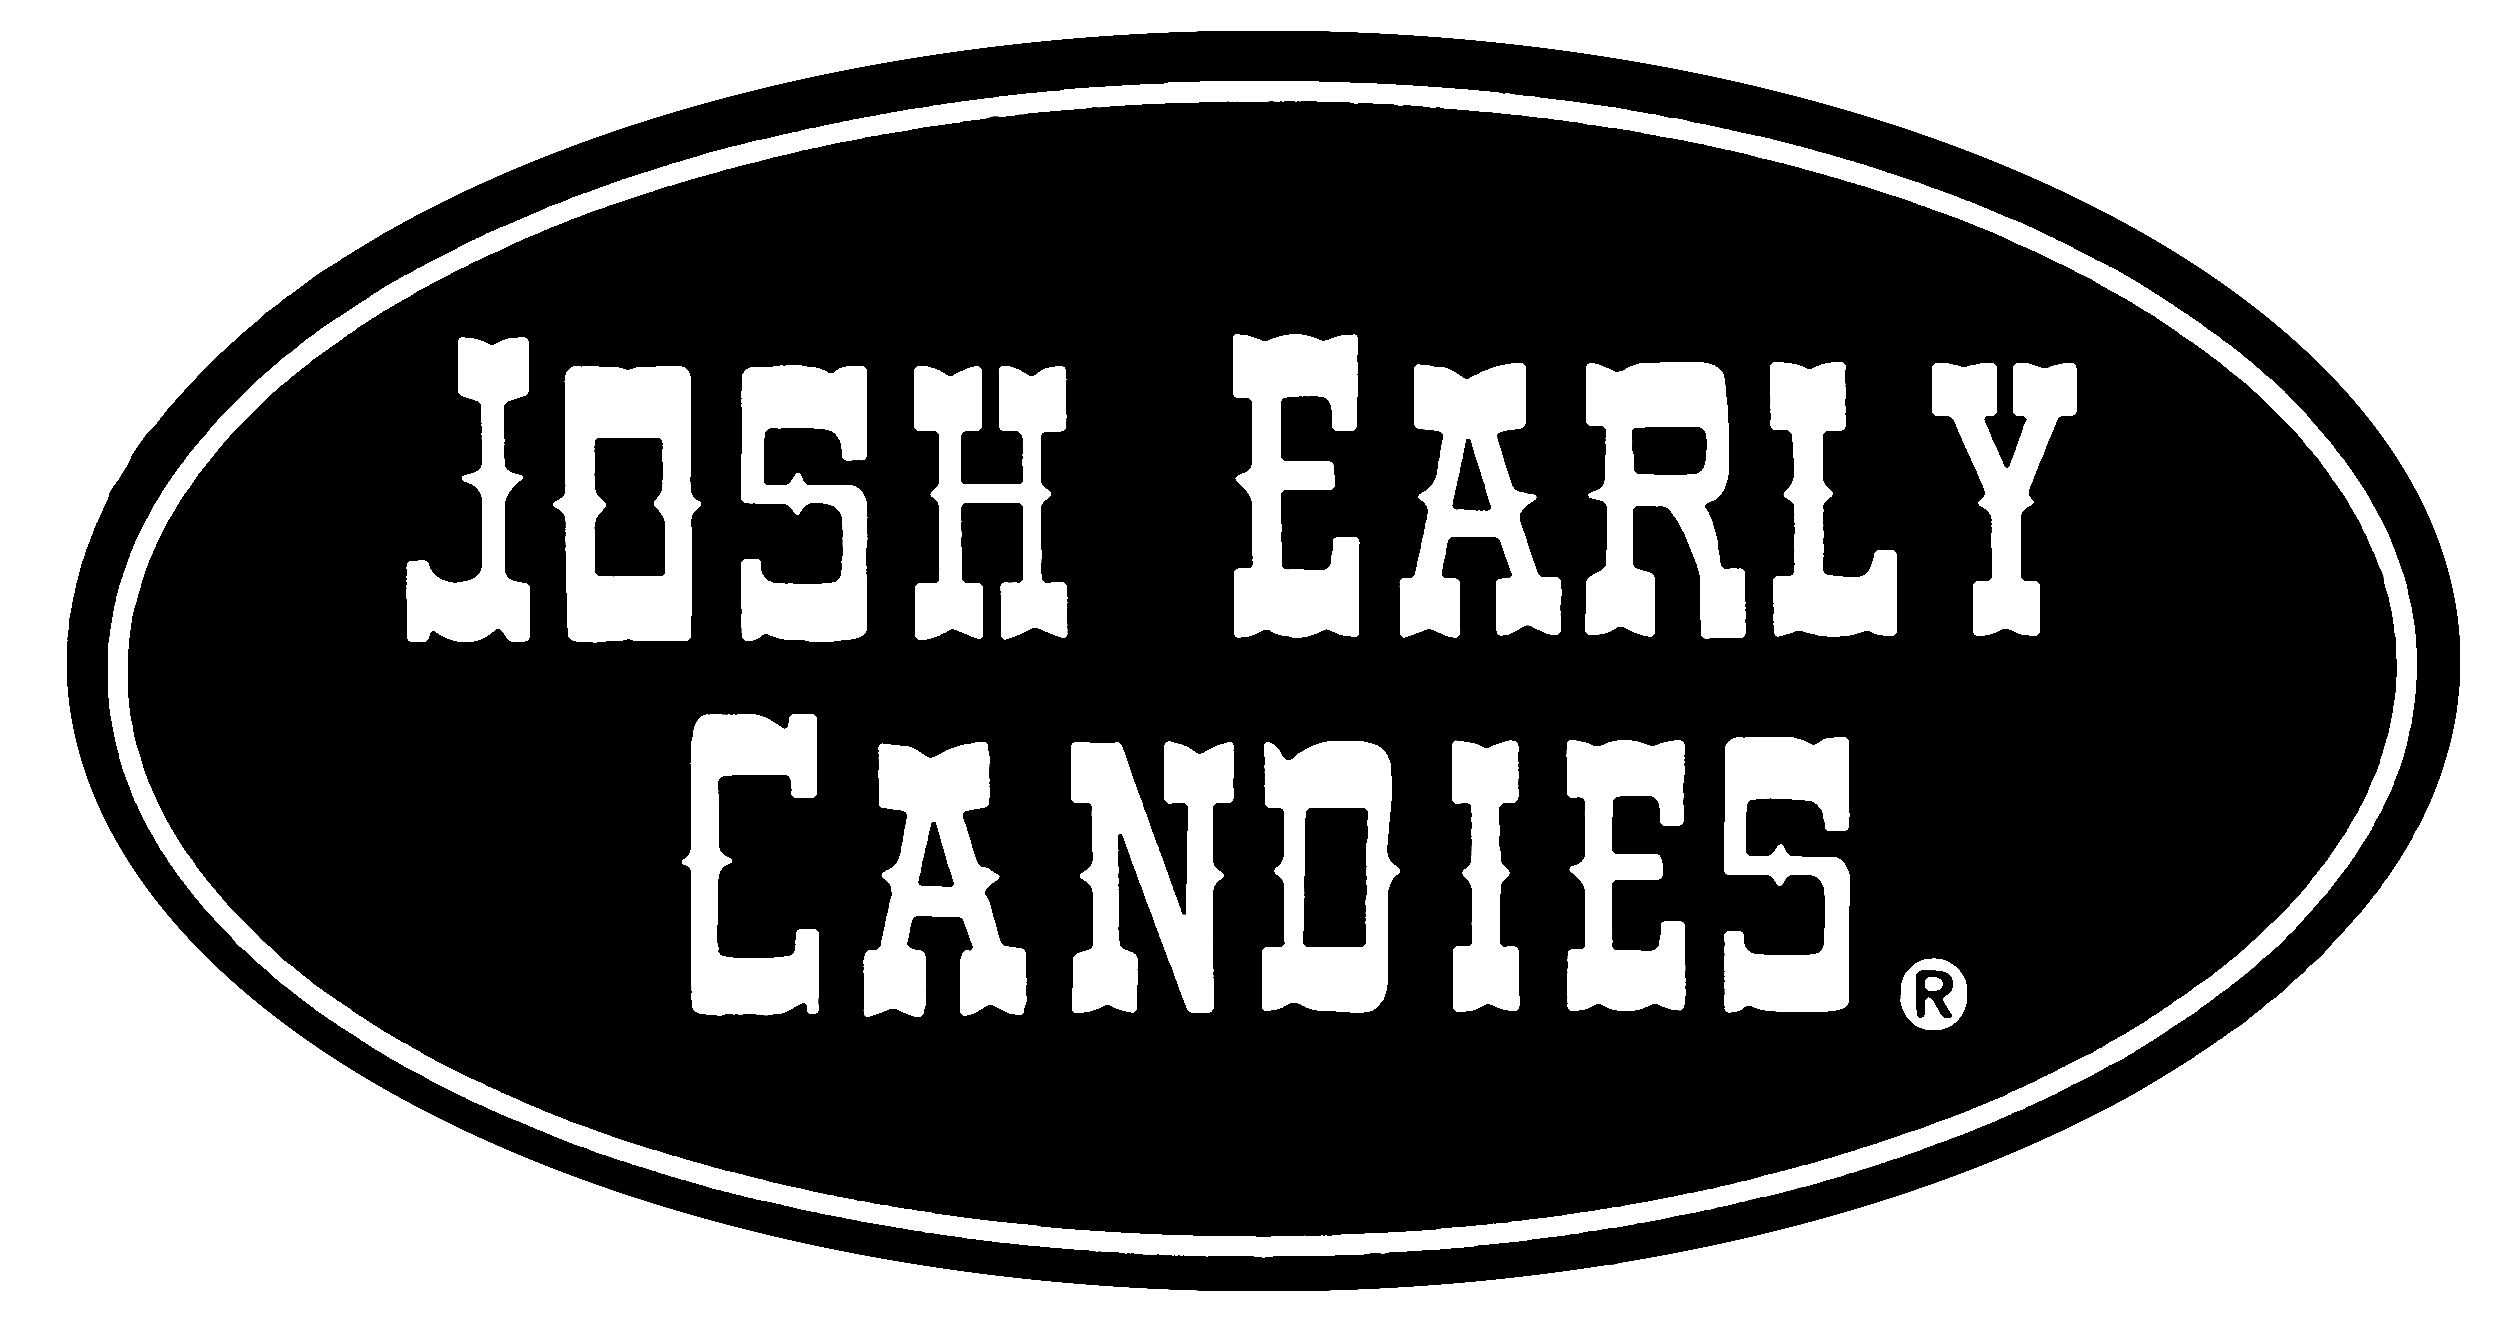 Josh Early Candies, Inc. logo